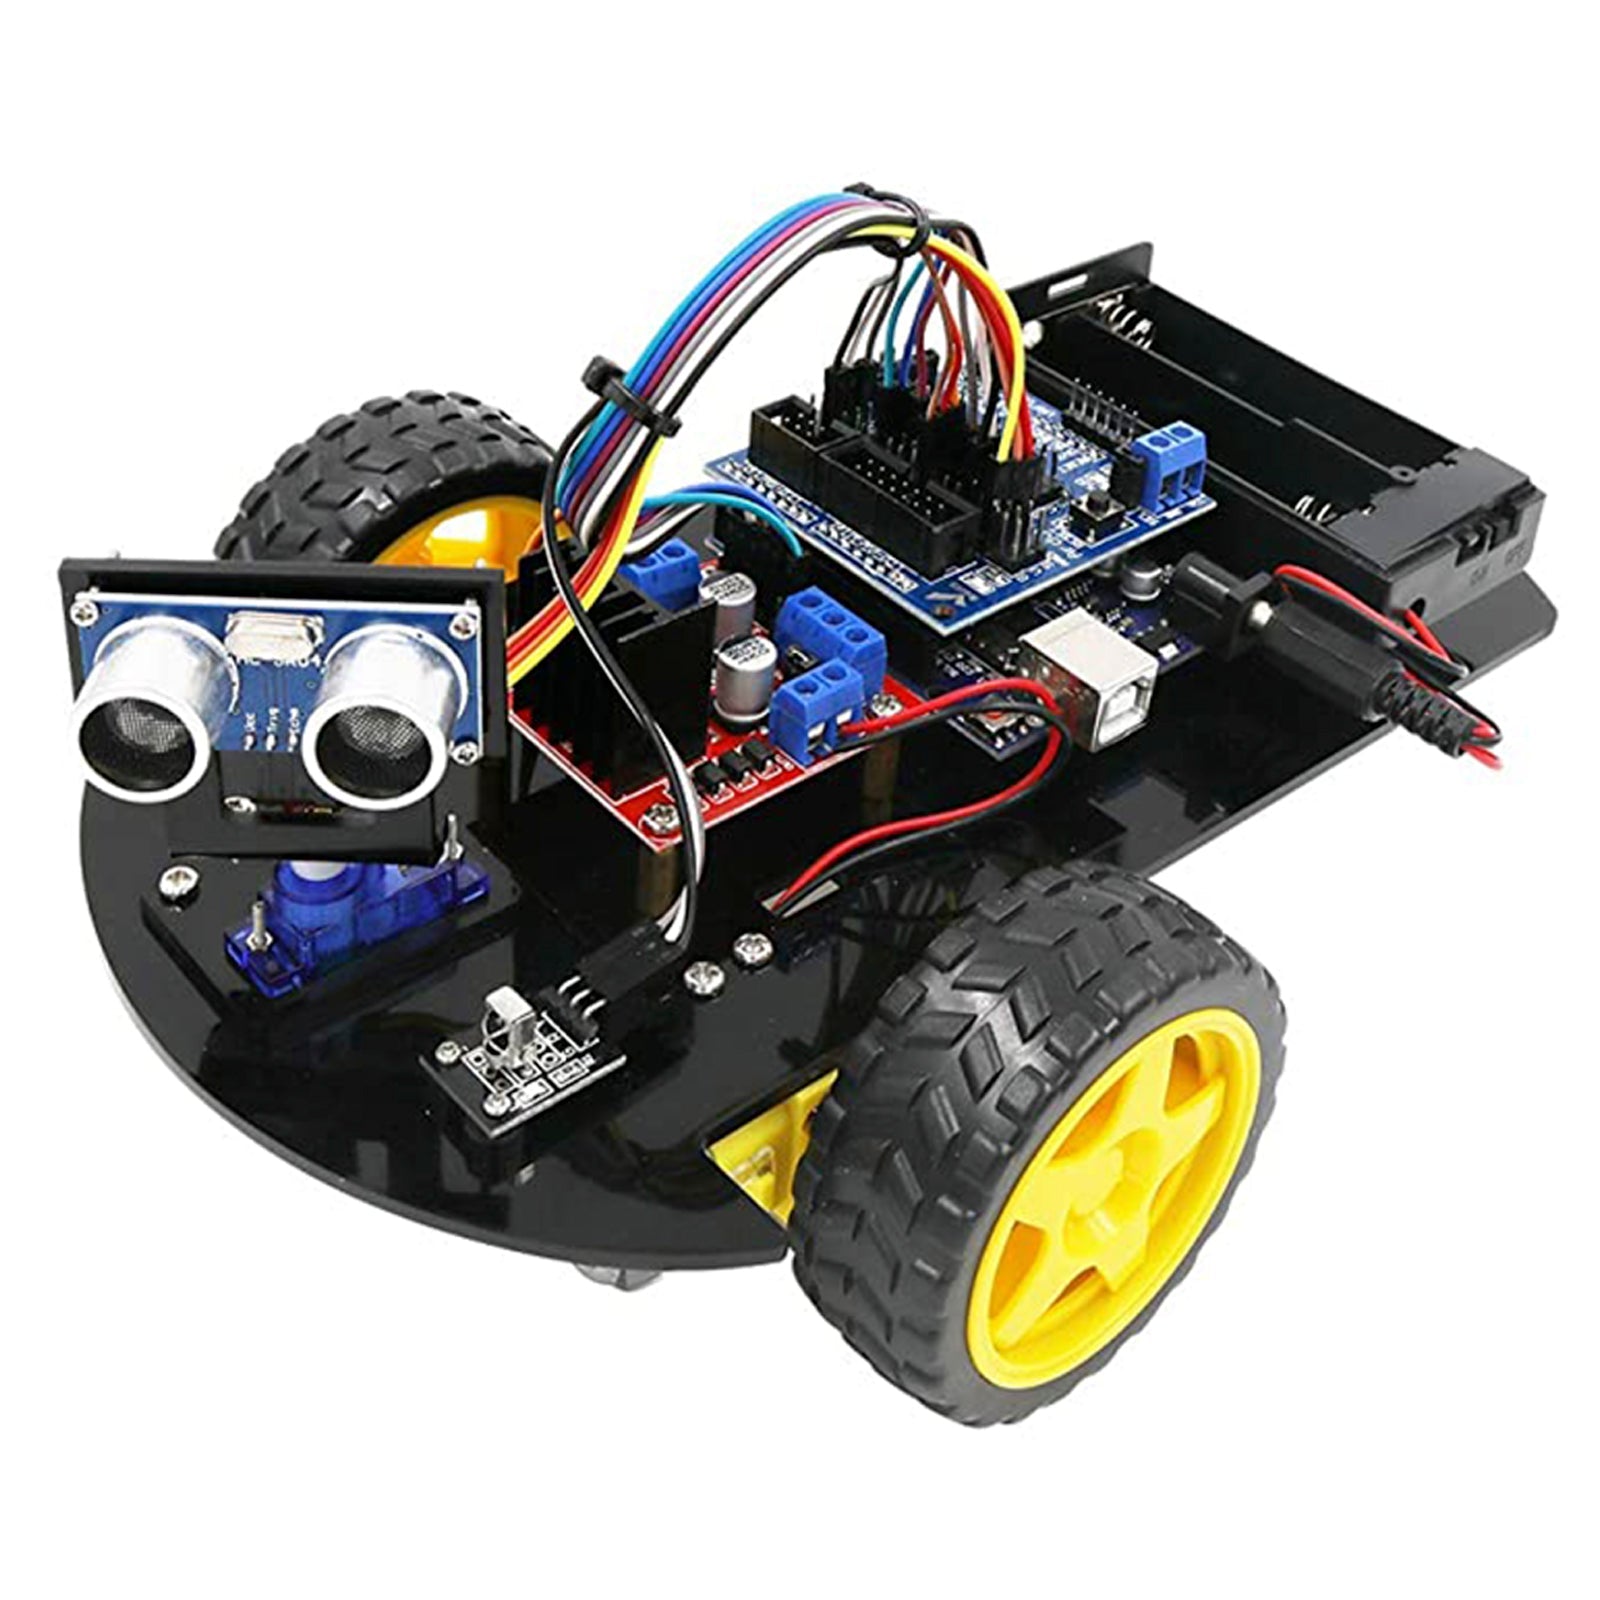 Smart car kit Electronic kits DIY V3 with Ultrasonic Ranging car Bluetooth  wireless control IR remote control